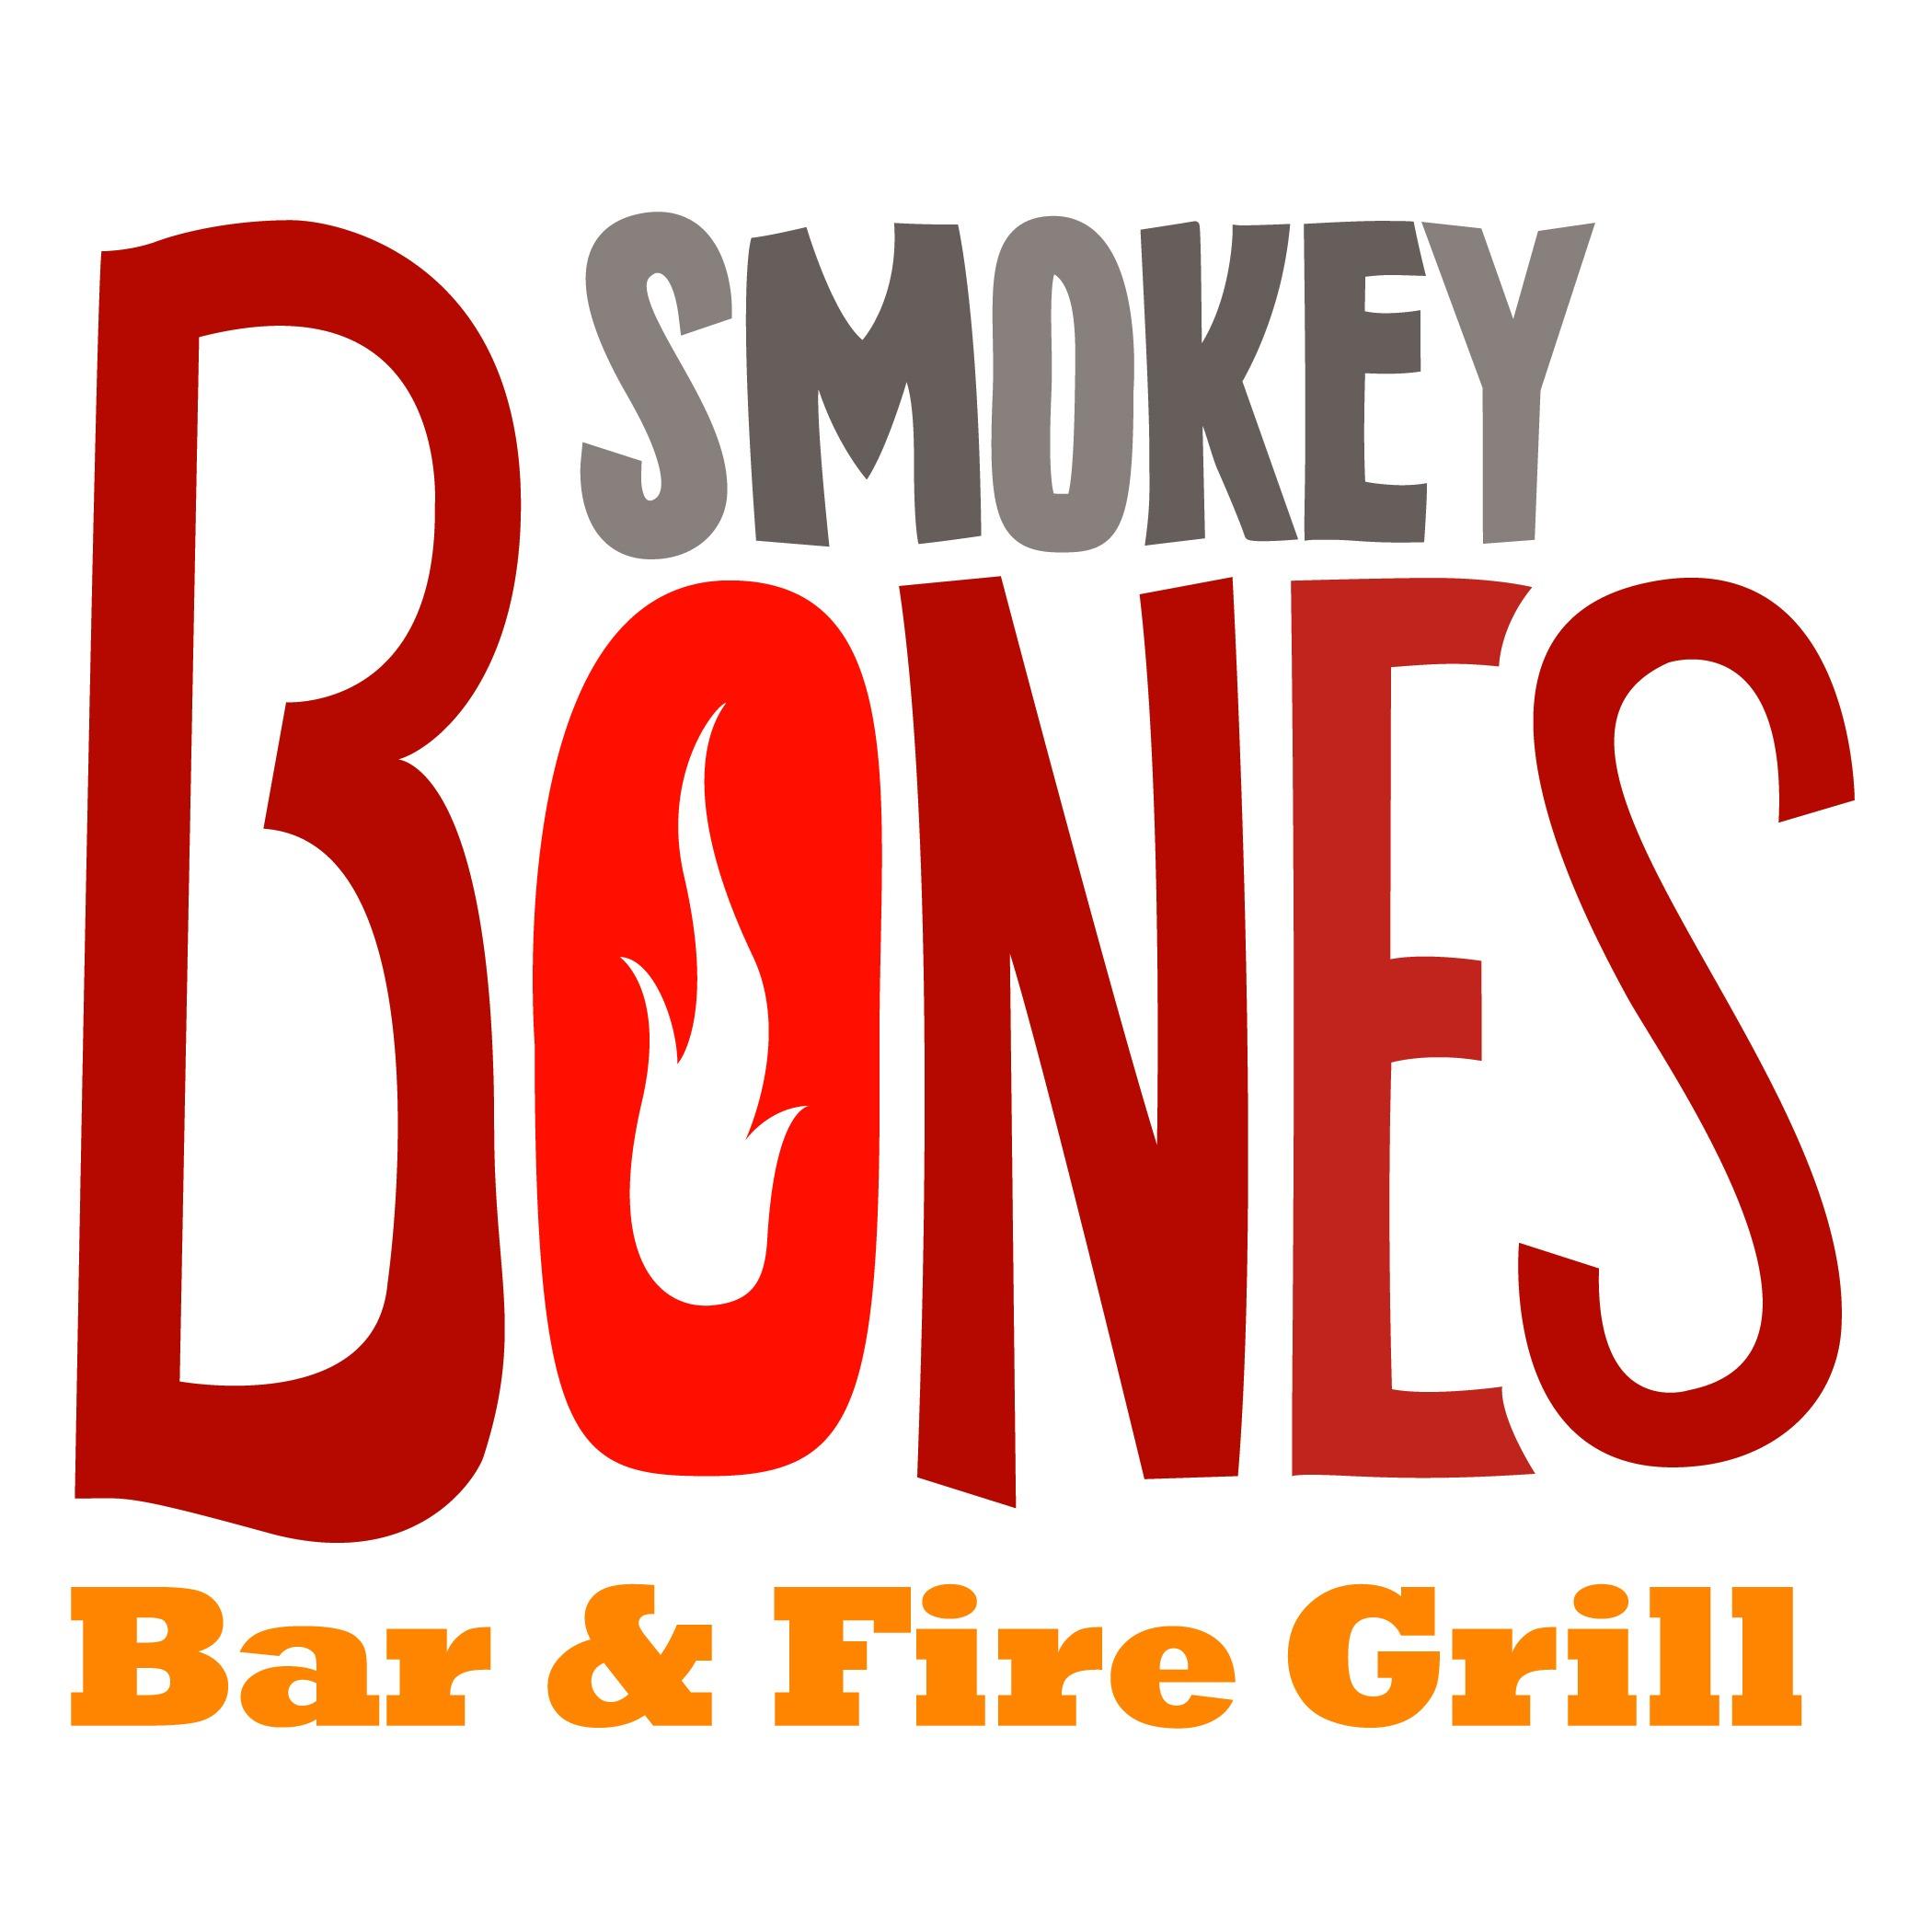 Smokey Bones Bar & Fire Grill Photo